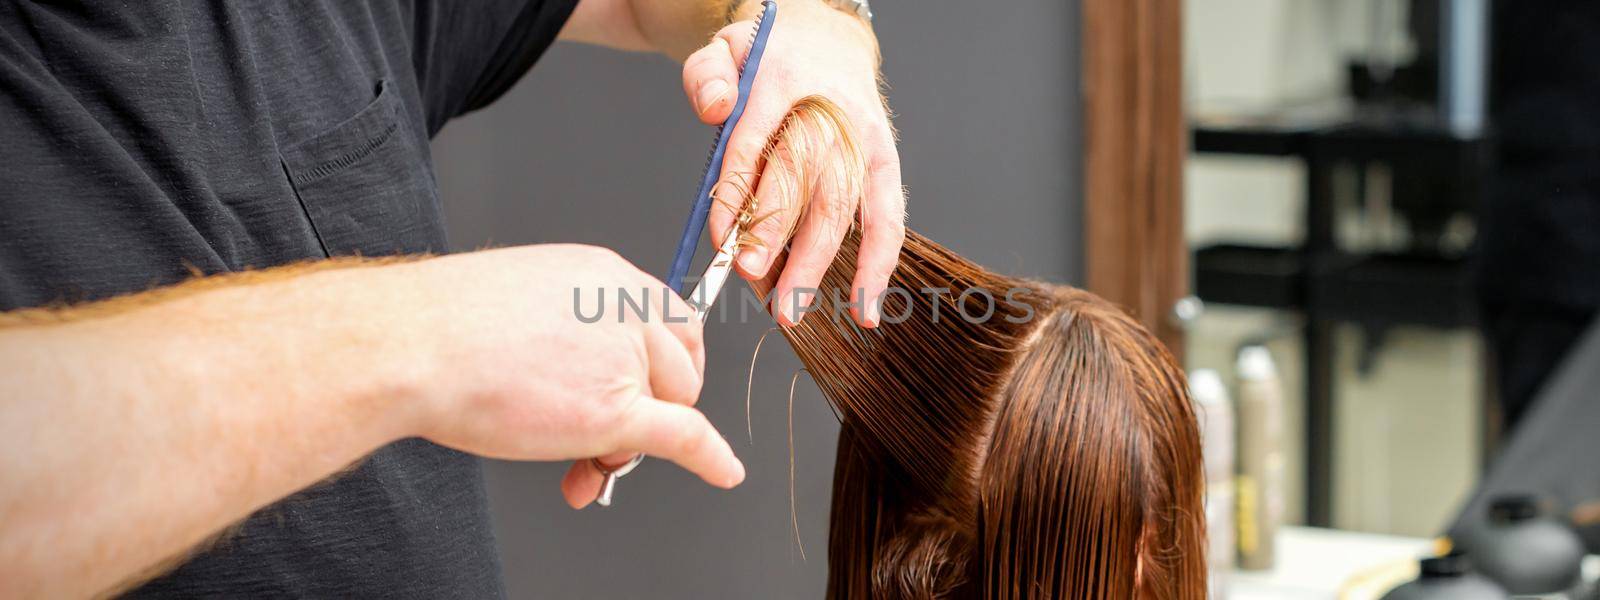 Woman having a new haircut. Male hairstylist cutting brown hair with scissors in a hair salon. by okskukuruza